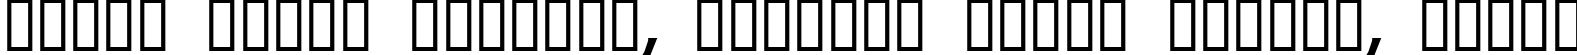 Пример написания шрифтом Brian James Condensed Bold текста на белорусском